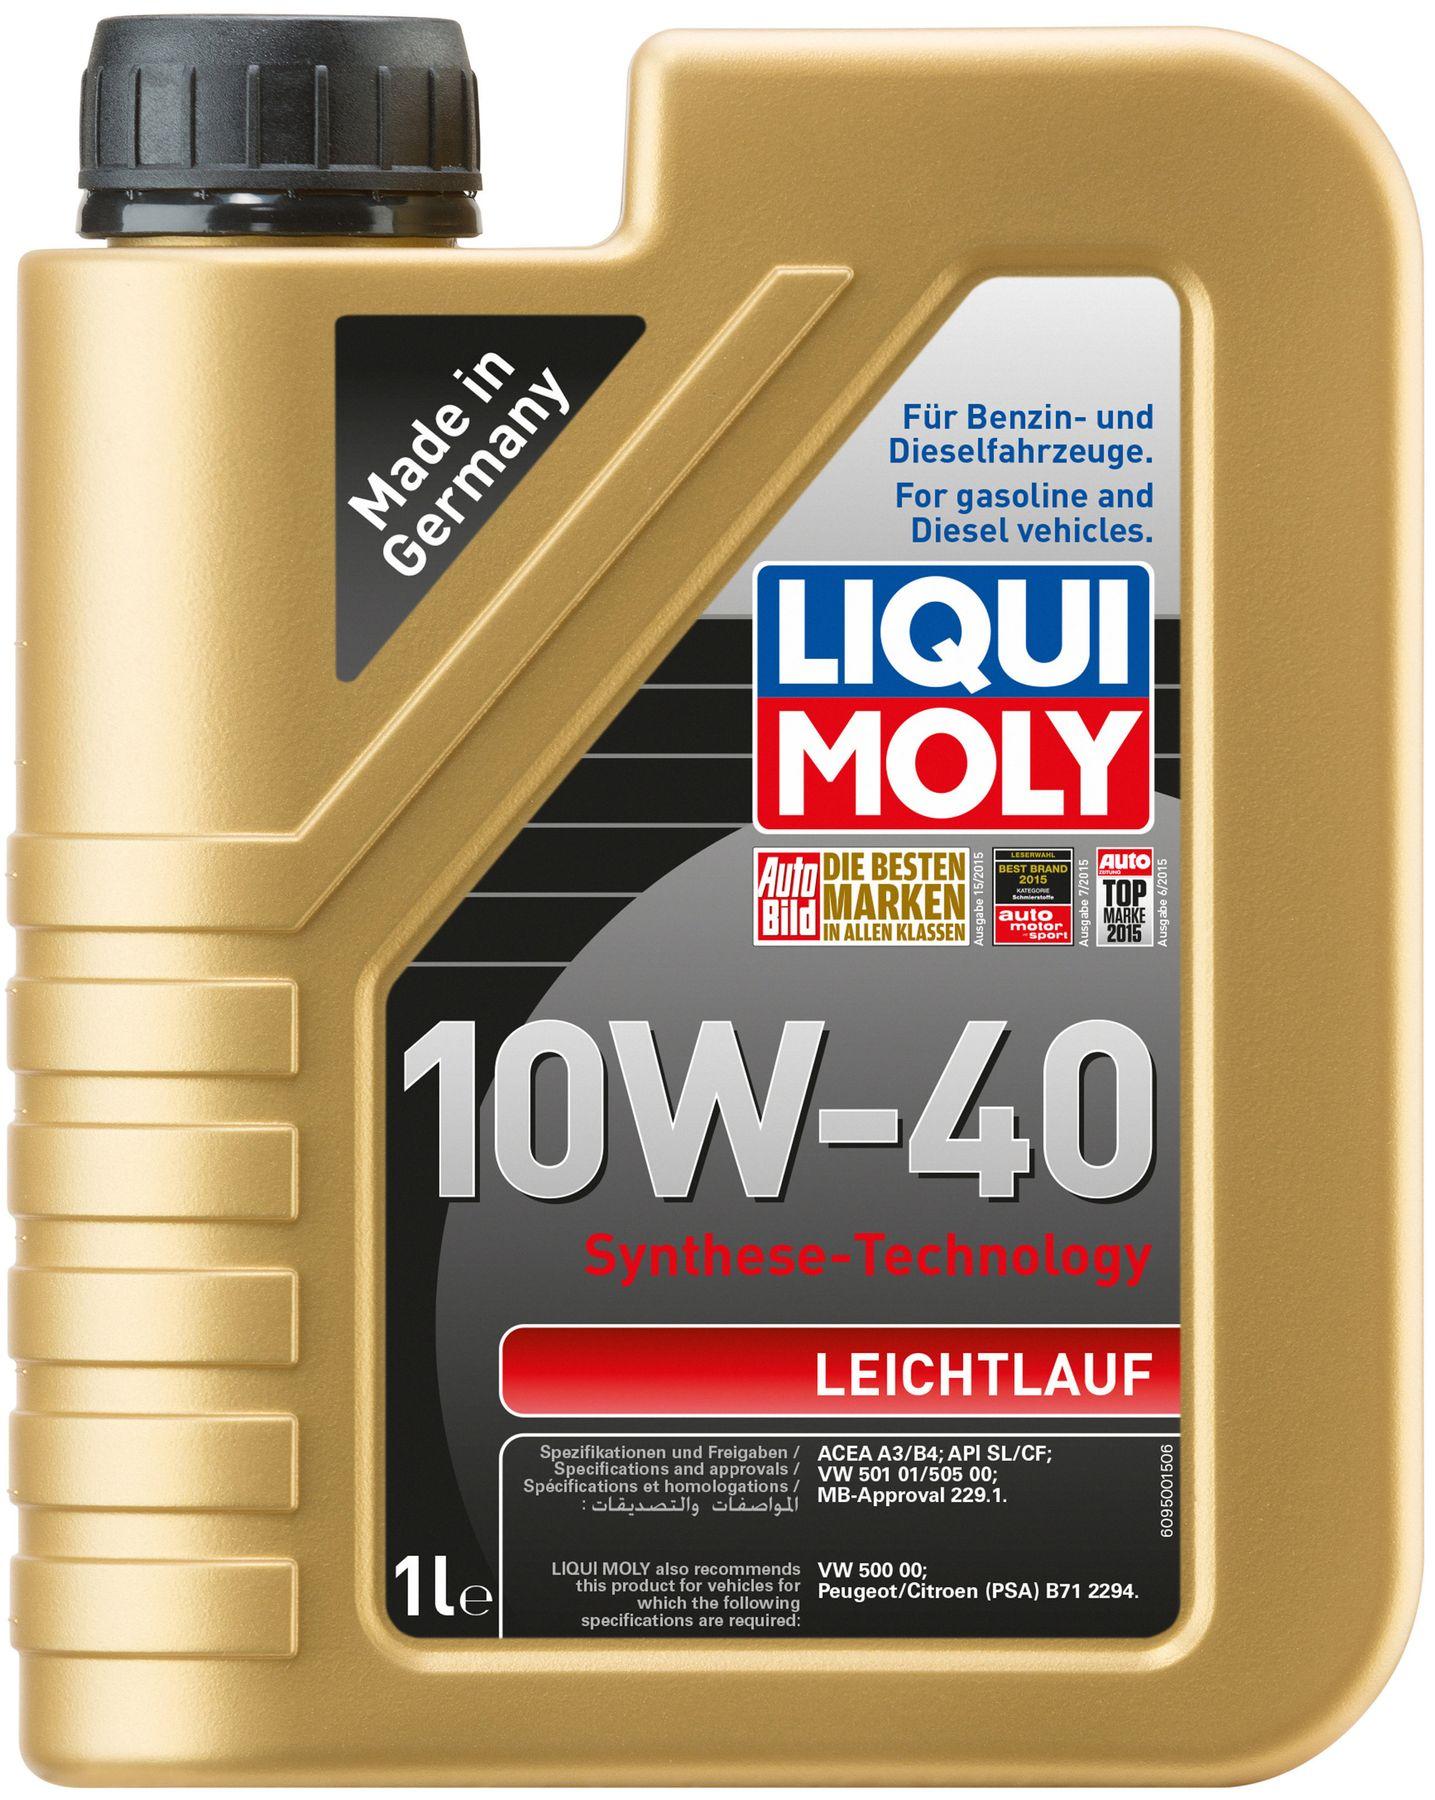 Моторное масло Liqui Moly Leichtlauf 10W-40, 1 литр (9500)